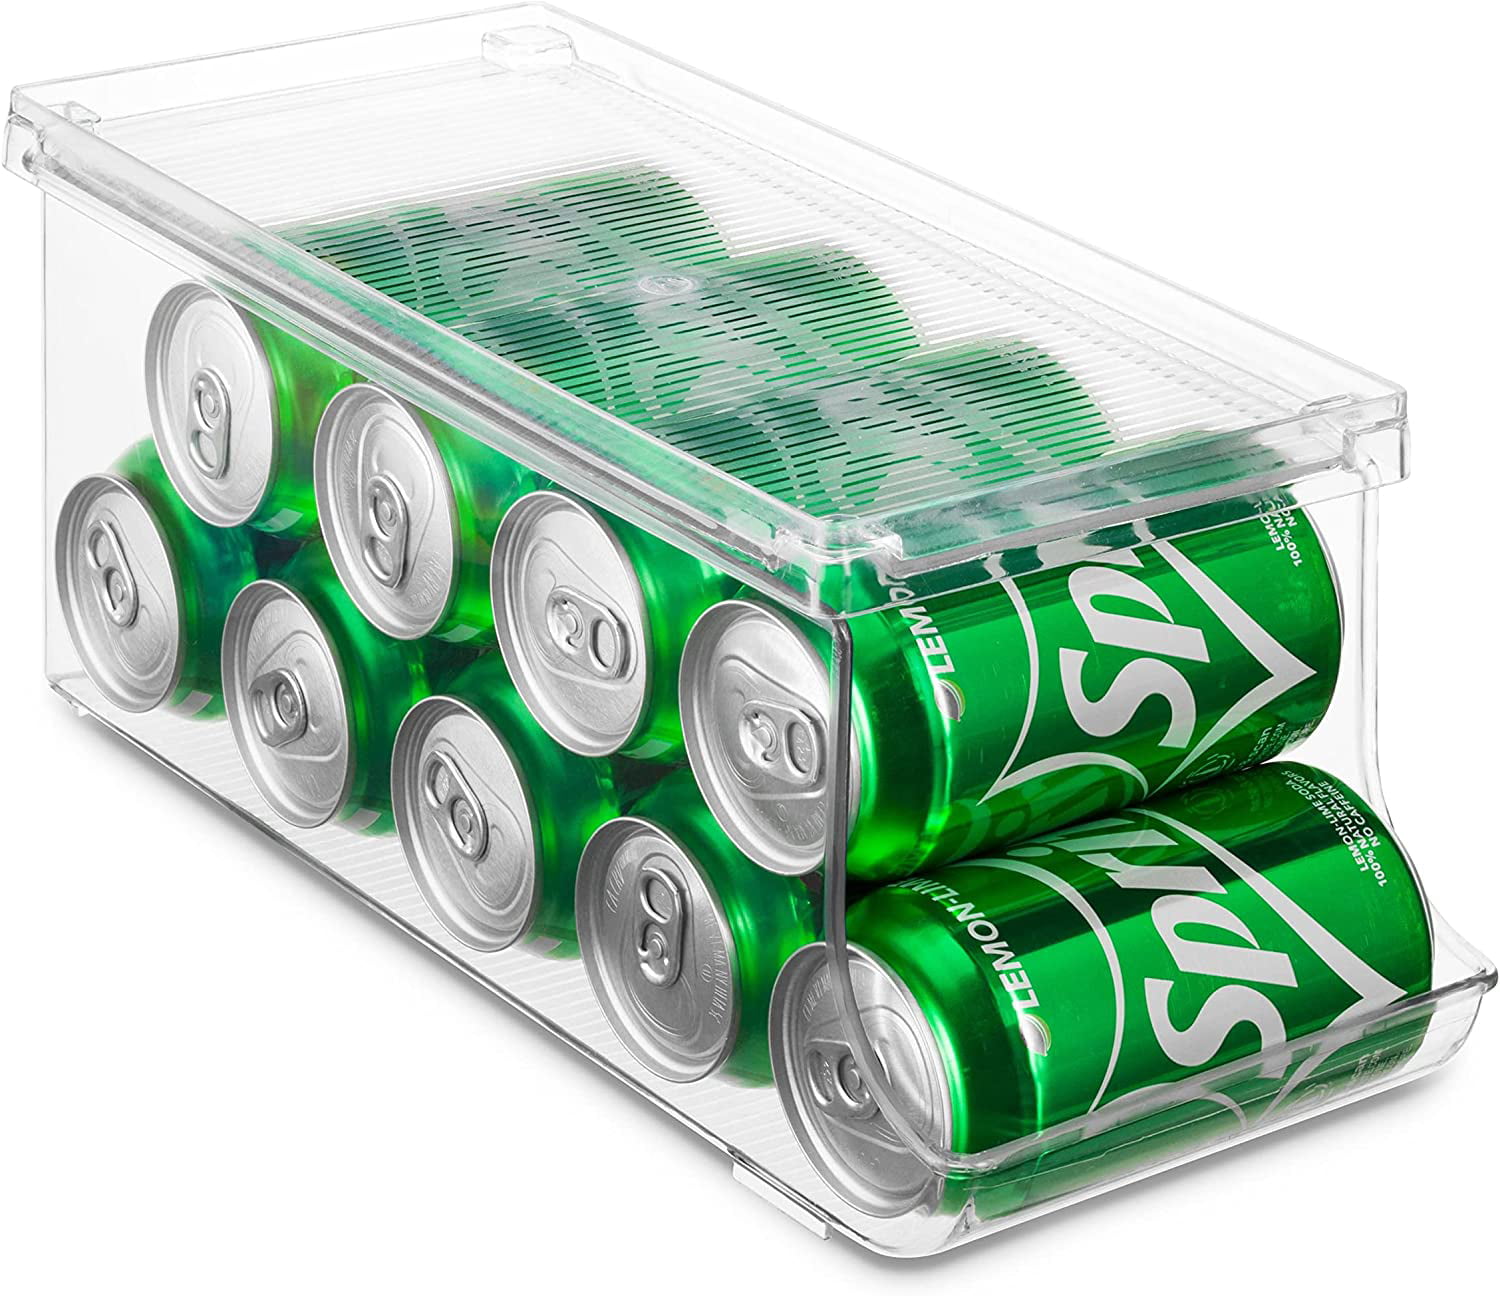 Boeetech boeetech stackable soda can dispenser organizer rack, stacking can  dispensers refrigerator organizer bins pop soda organizer